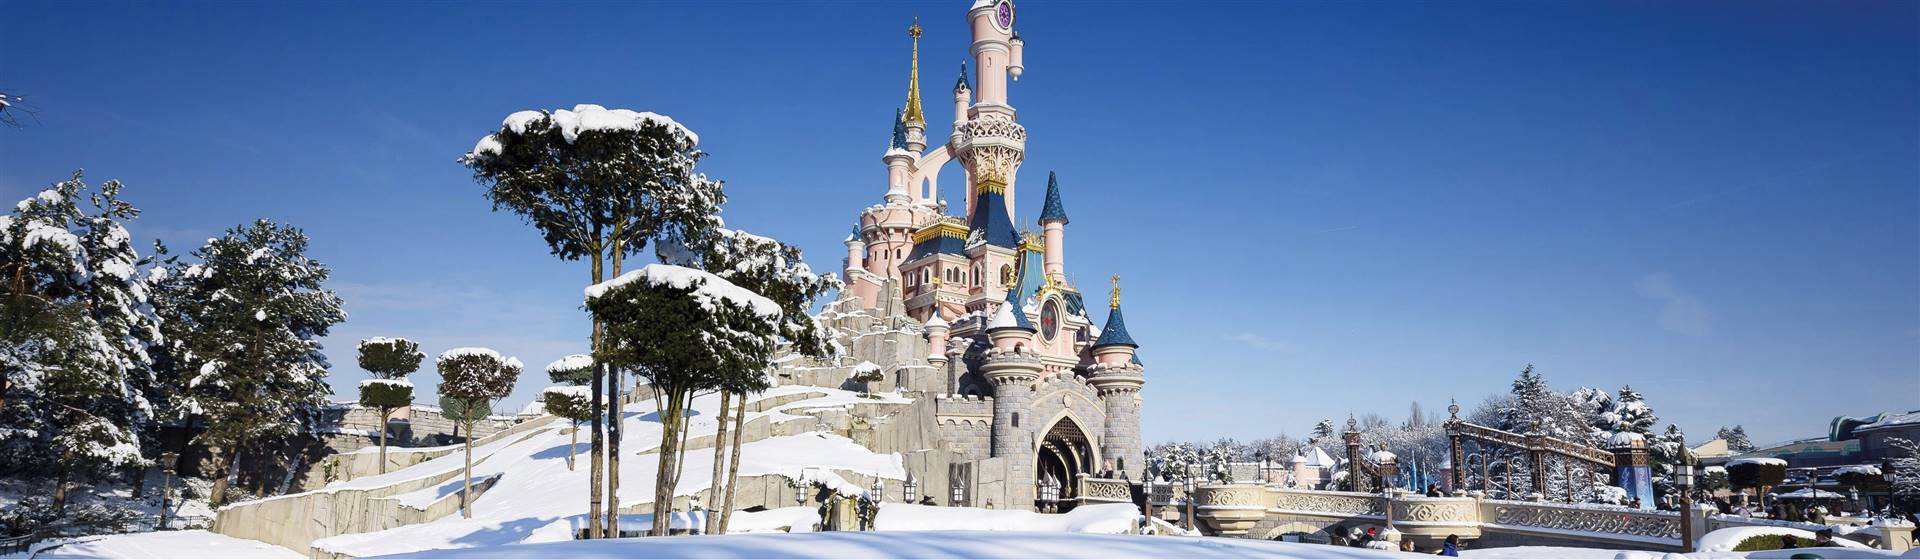 Enchanted Christmas at Disneyland Paris 